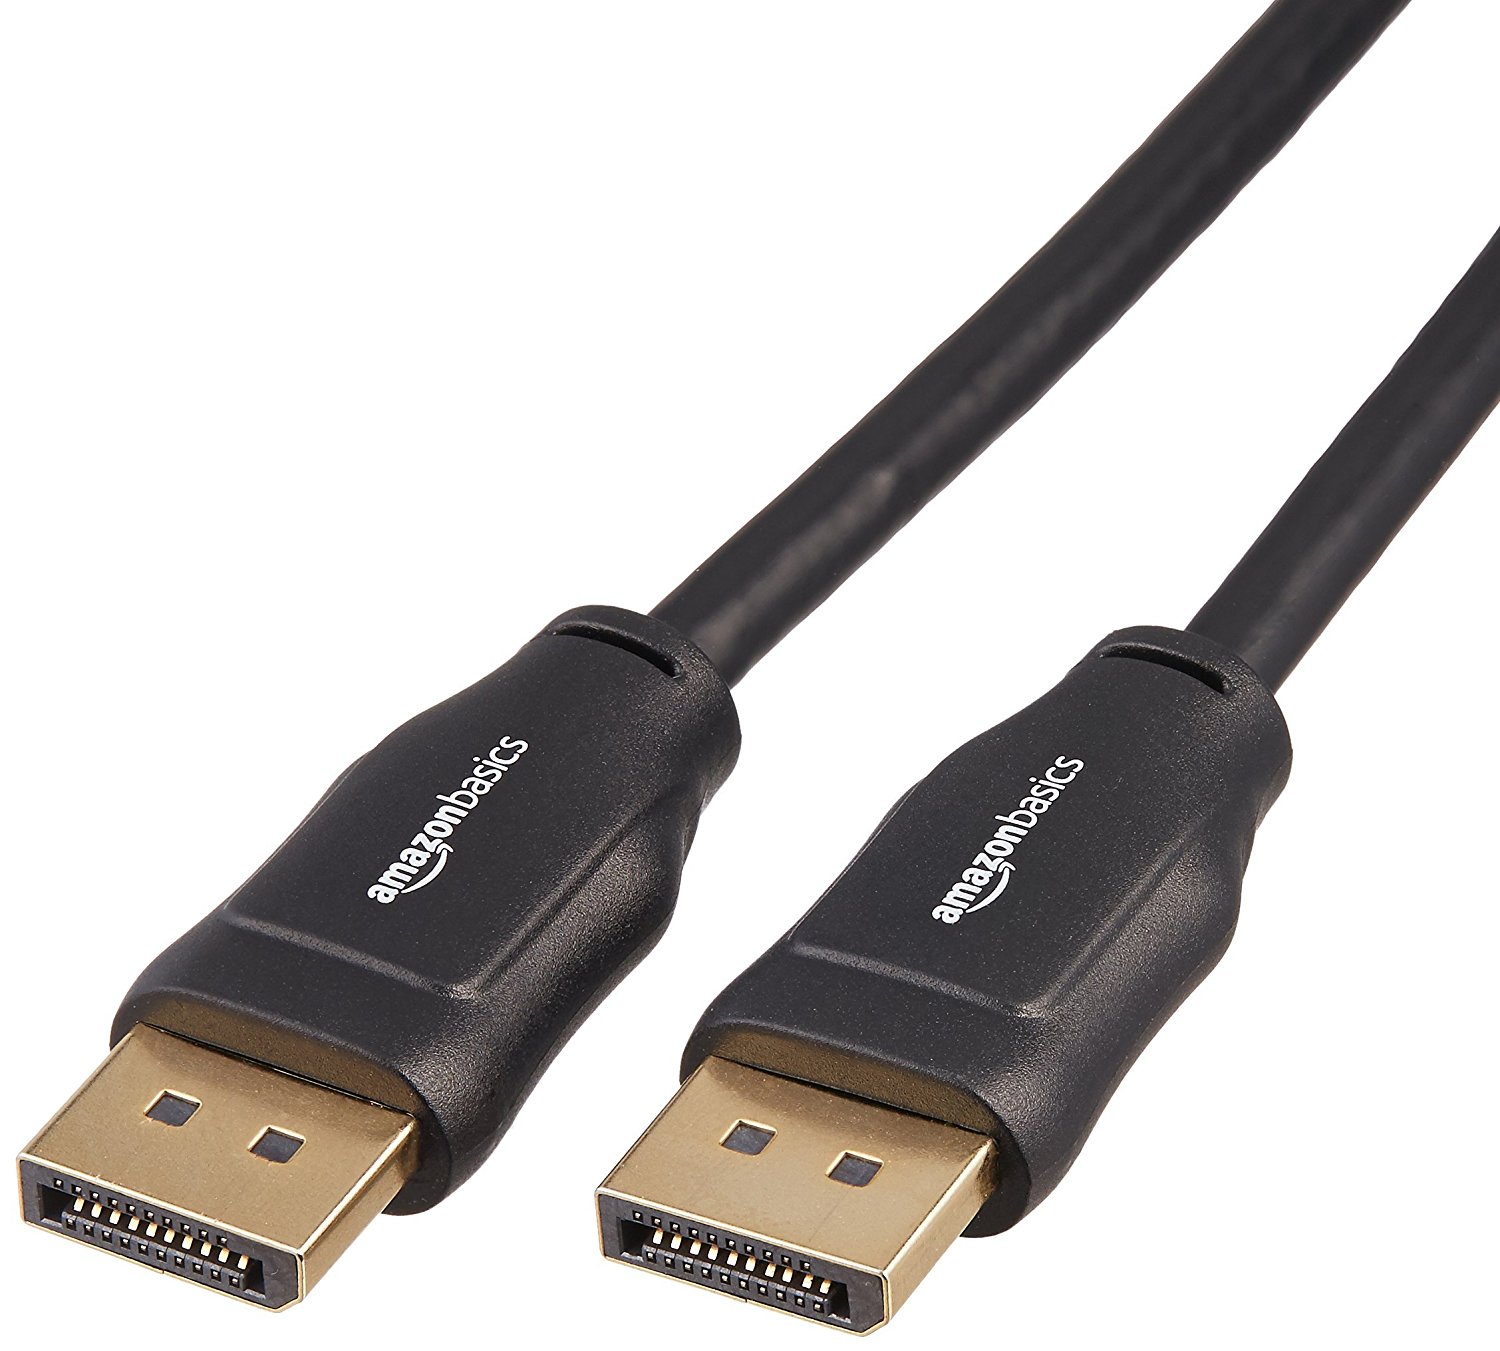 Amazon.com: AmazonBasics DisplayPort to DisplayPort Cable - 6 Feet ...